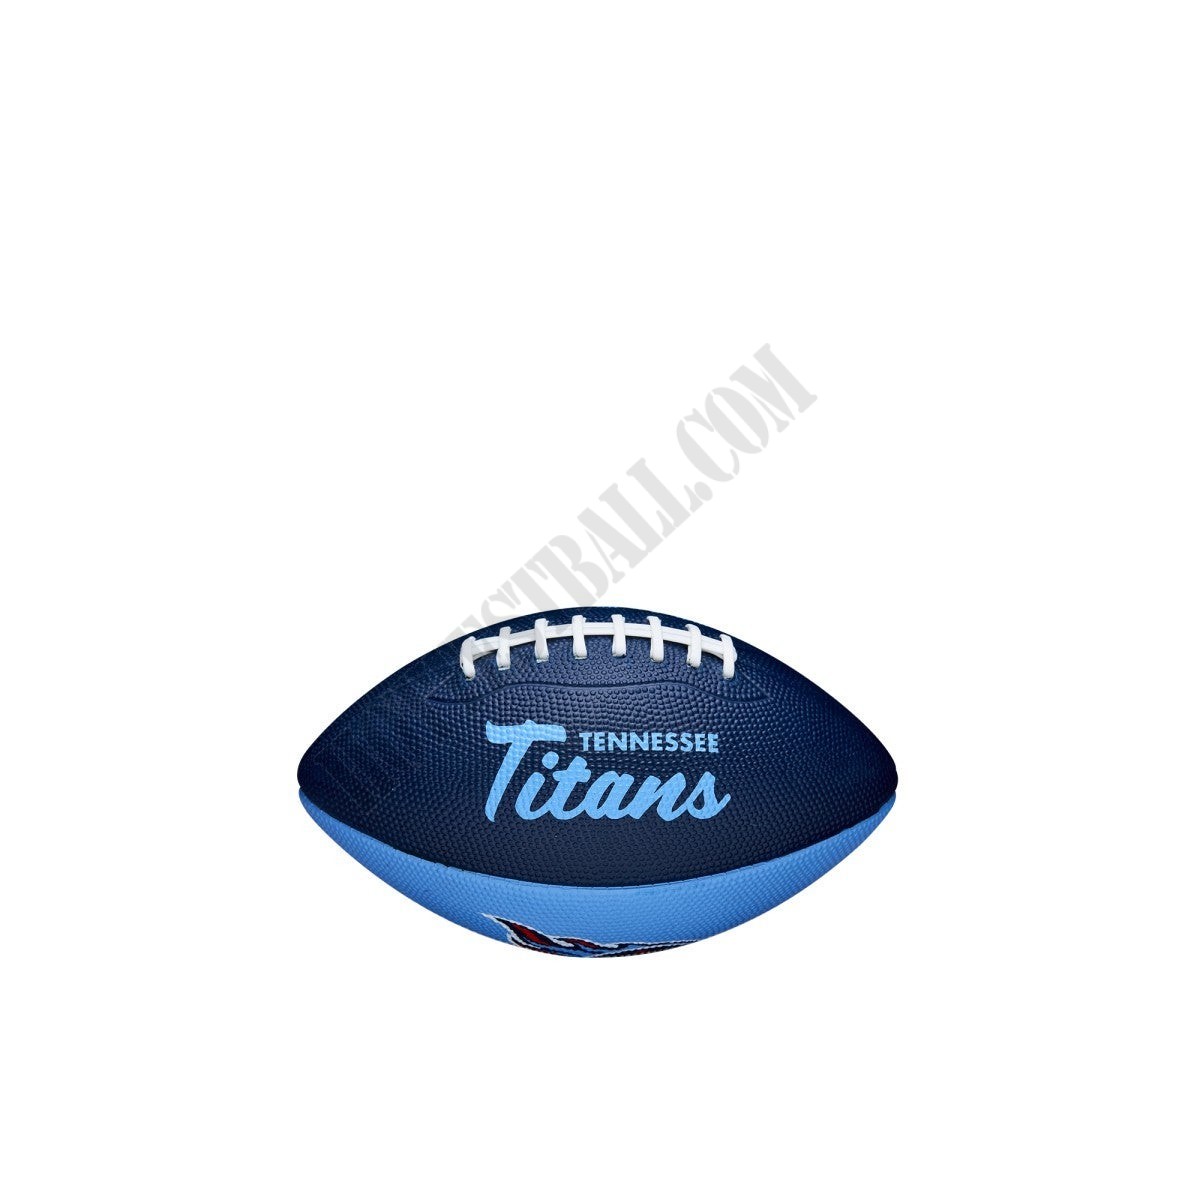 NFL Retro Mini Football - Tennessee Titans ● Wilson Promotions - NFL Retro Mini Football - Tennessee Titans ● Wilson Promotions